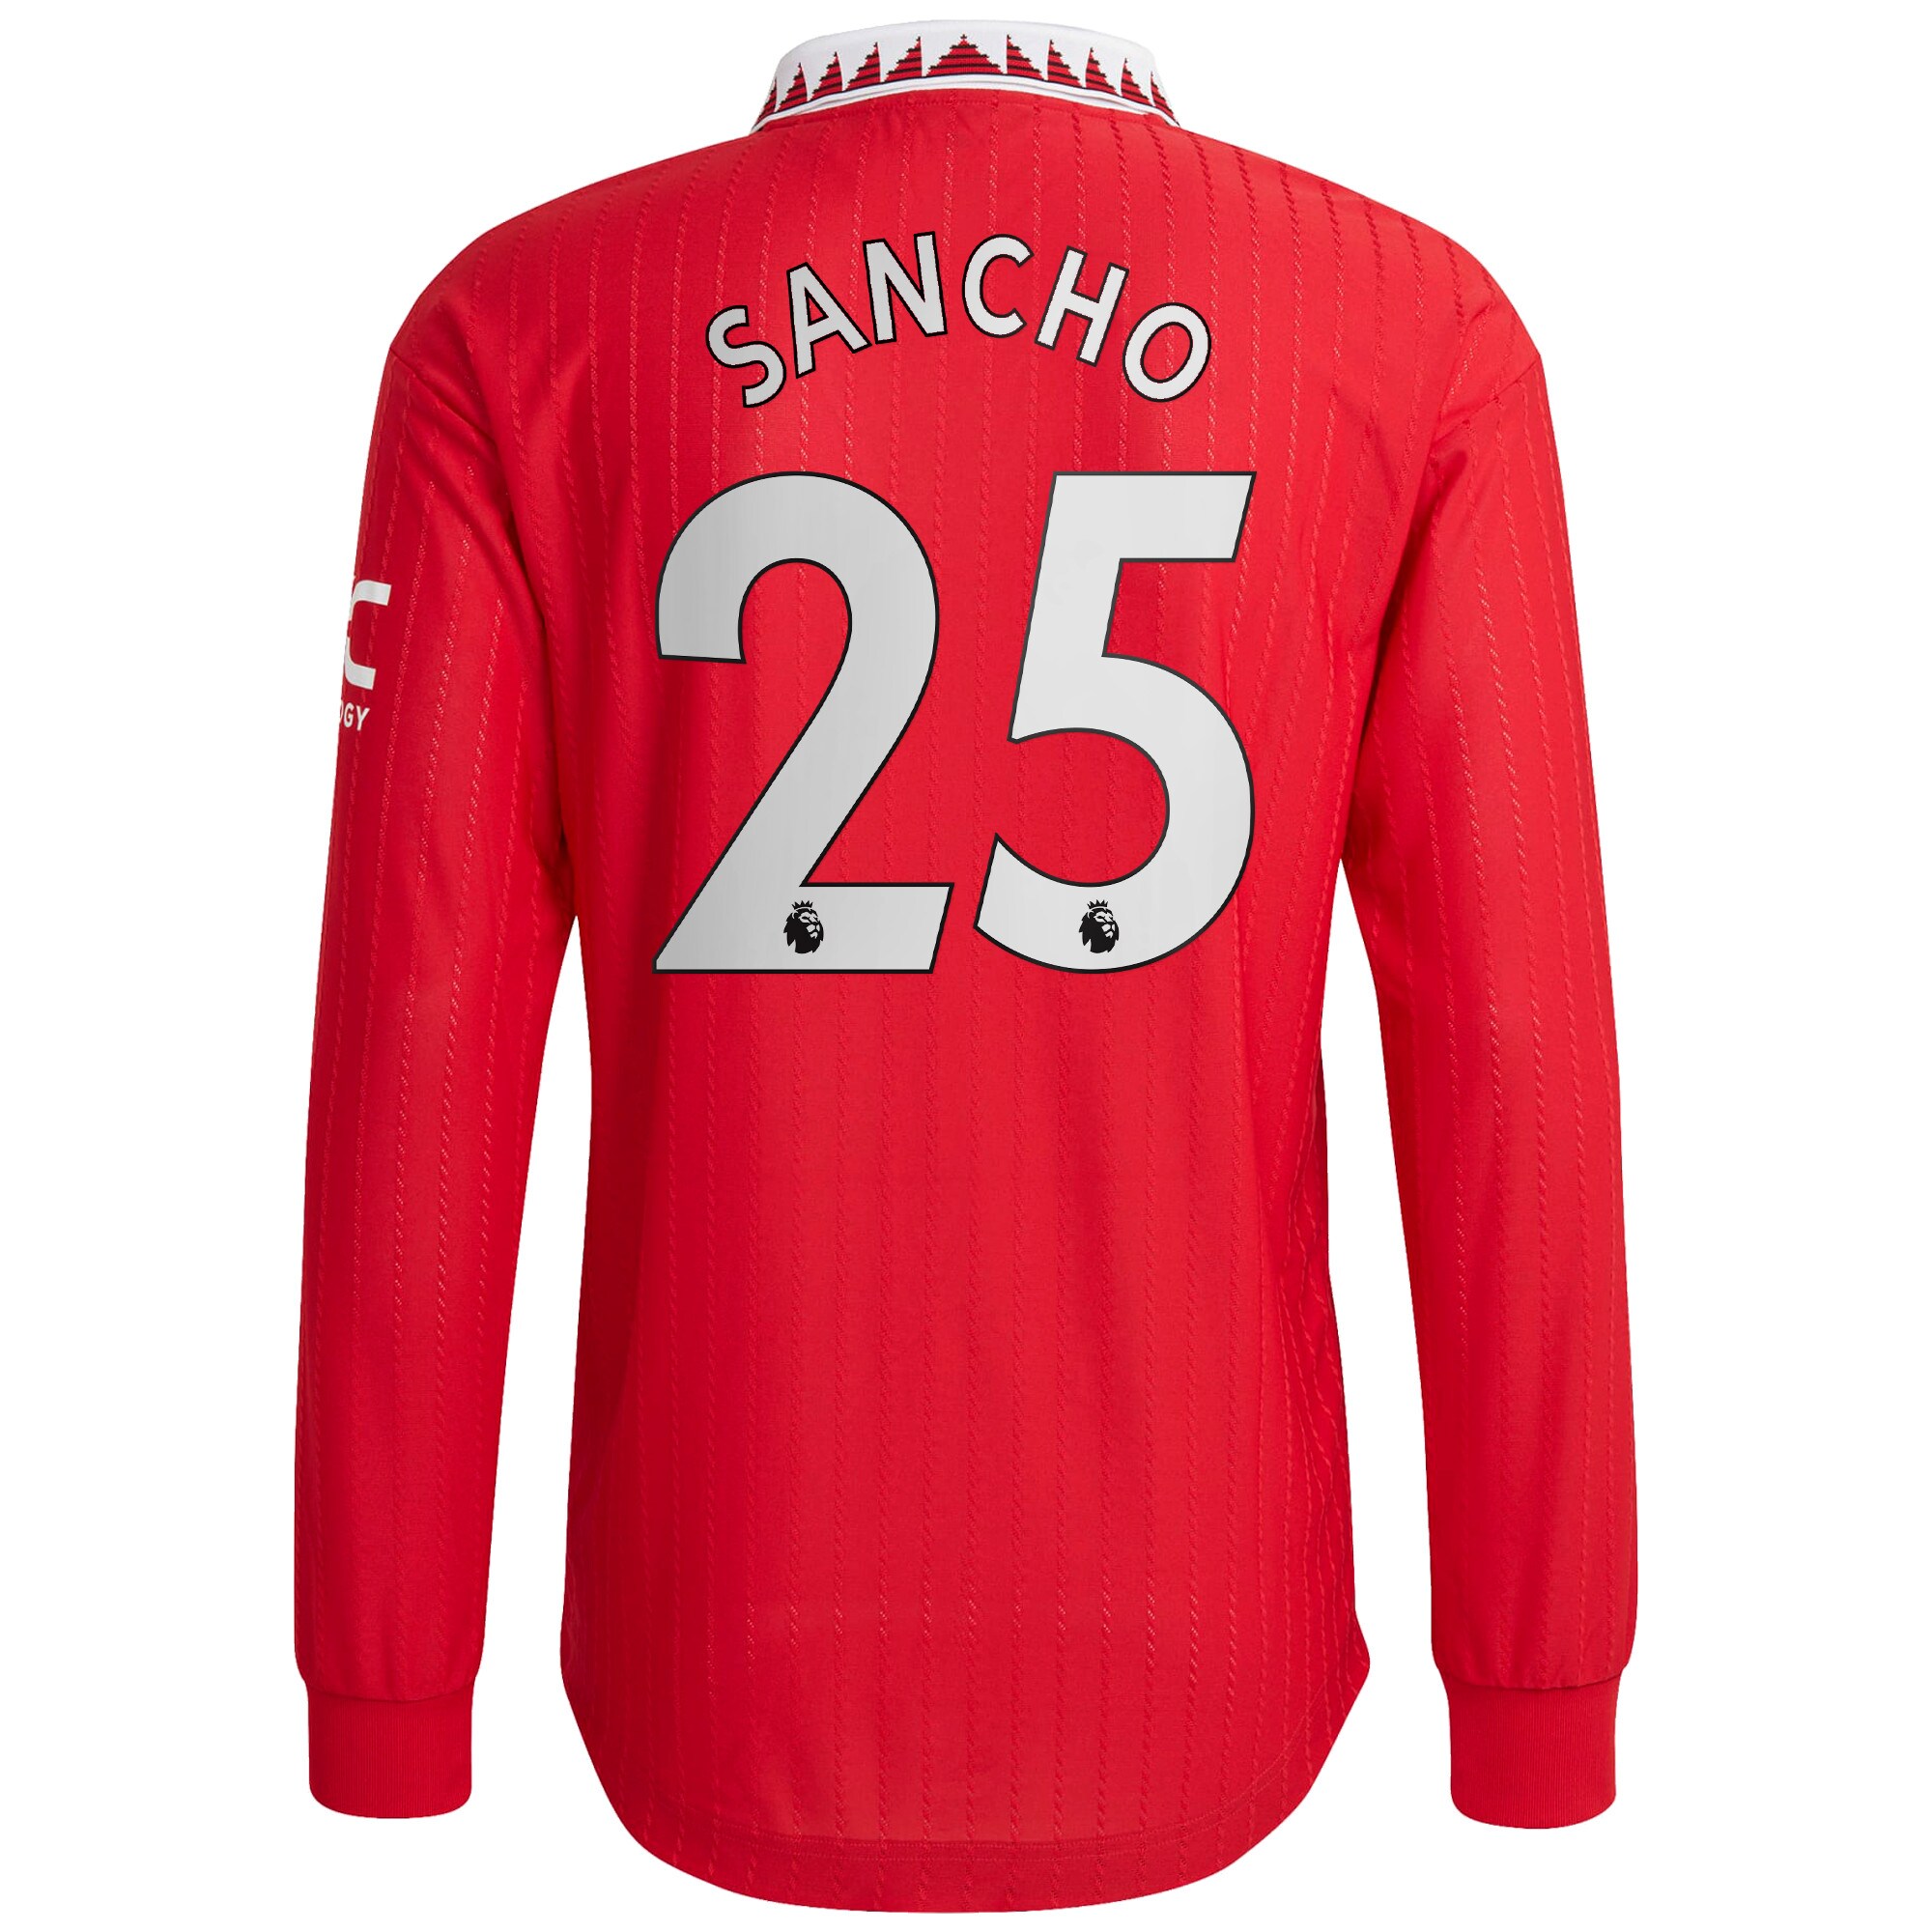 Men Manchester United Home Shirts Jadon Sancho Authentic Shirt 2022-23 Long Sleeve Sancho 25 Printing